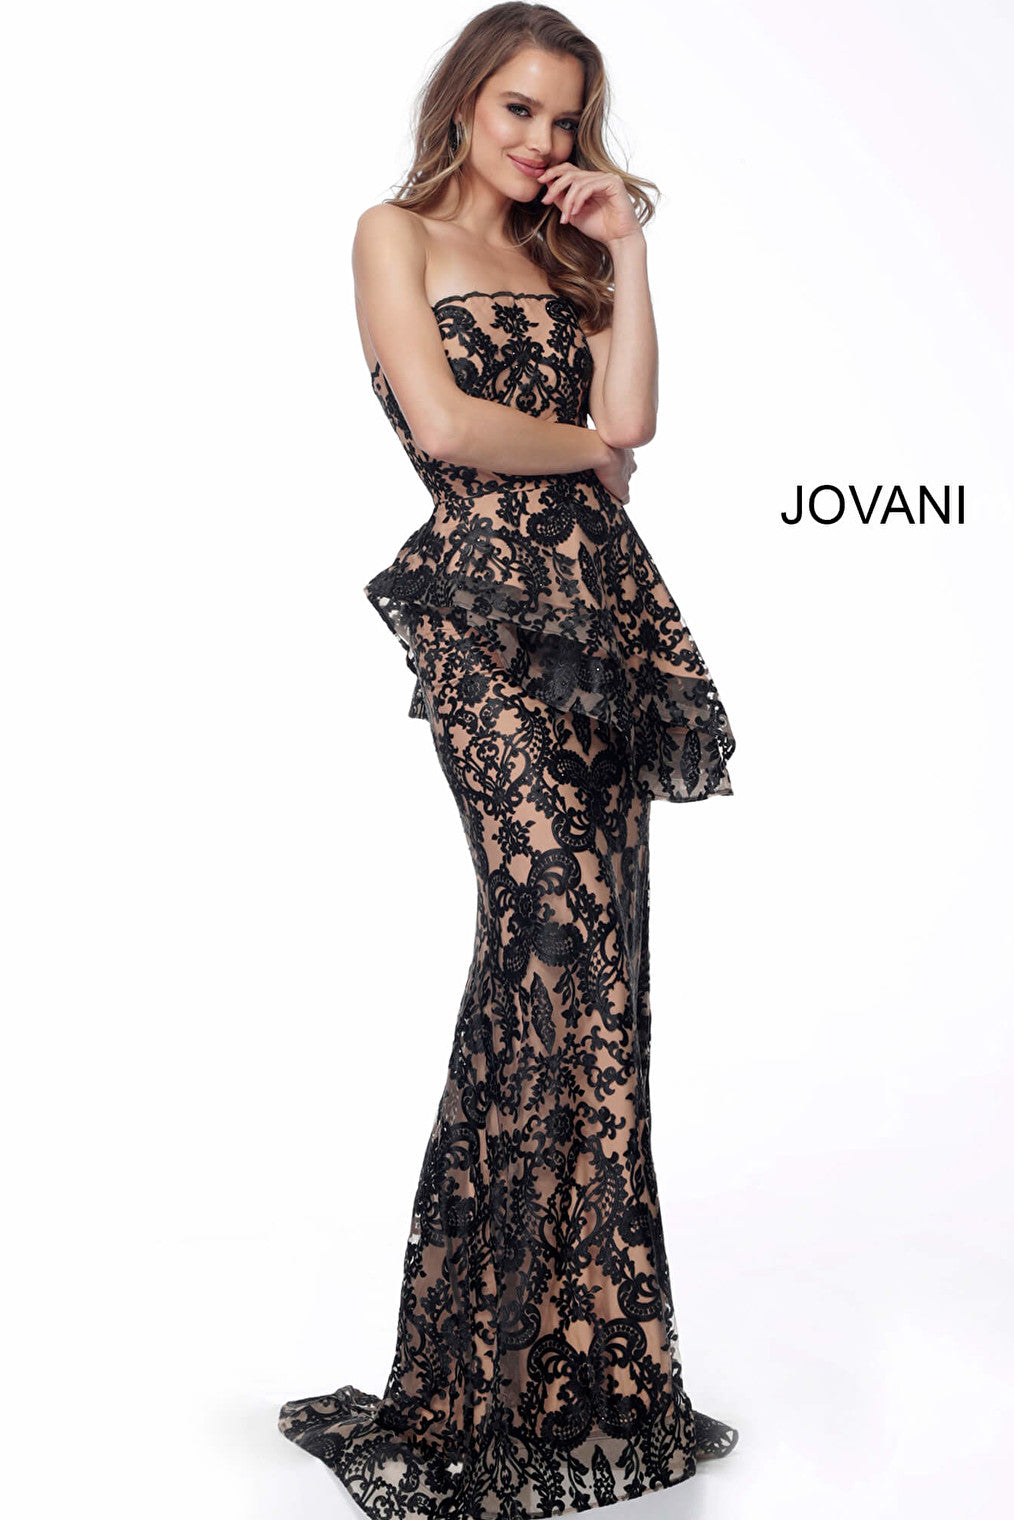 Jovani black nude peplum evening dress 61524